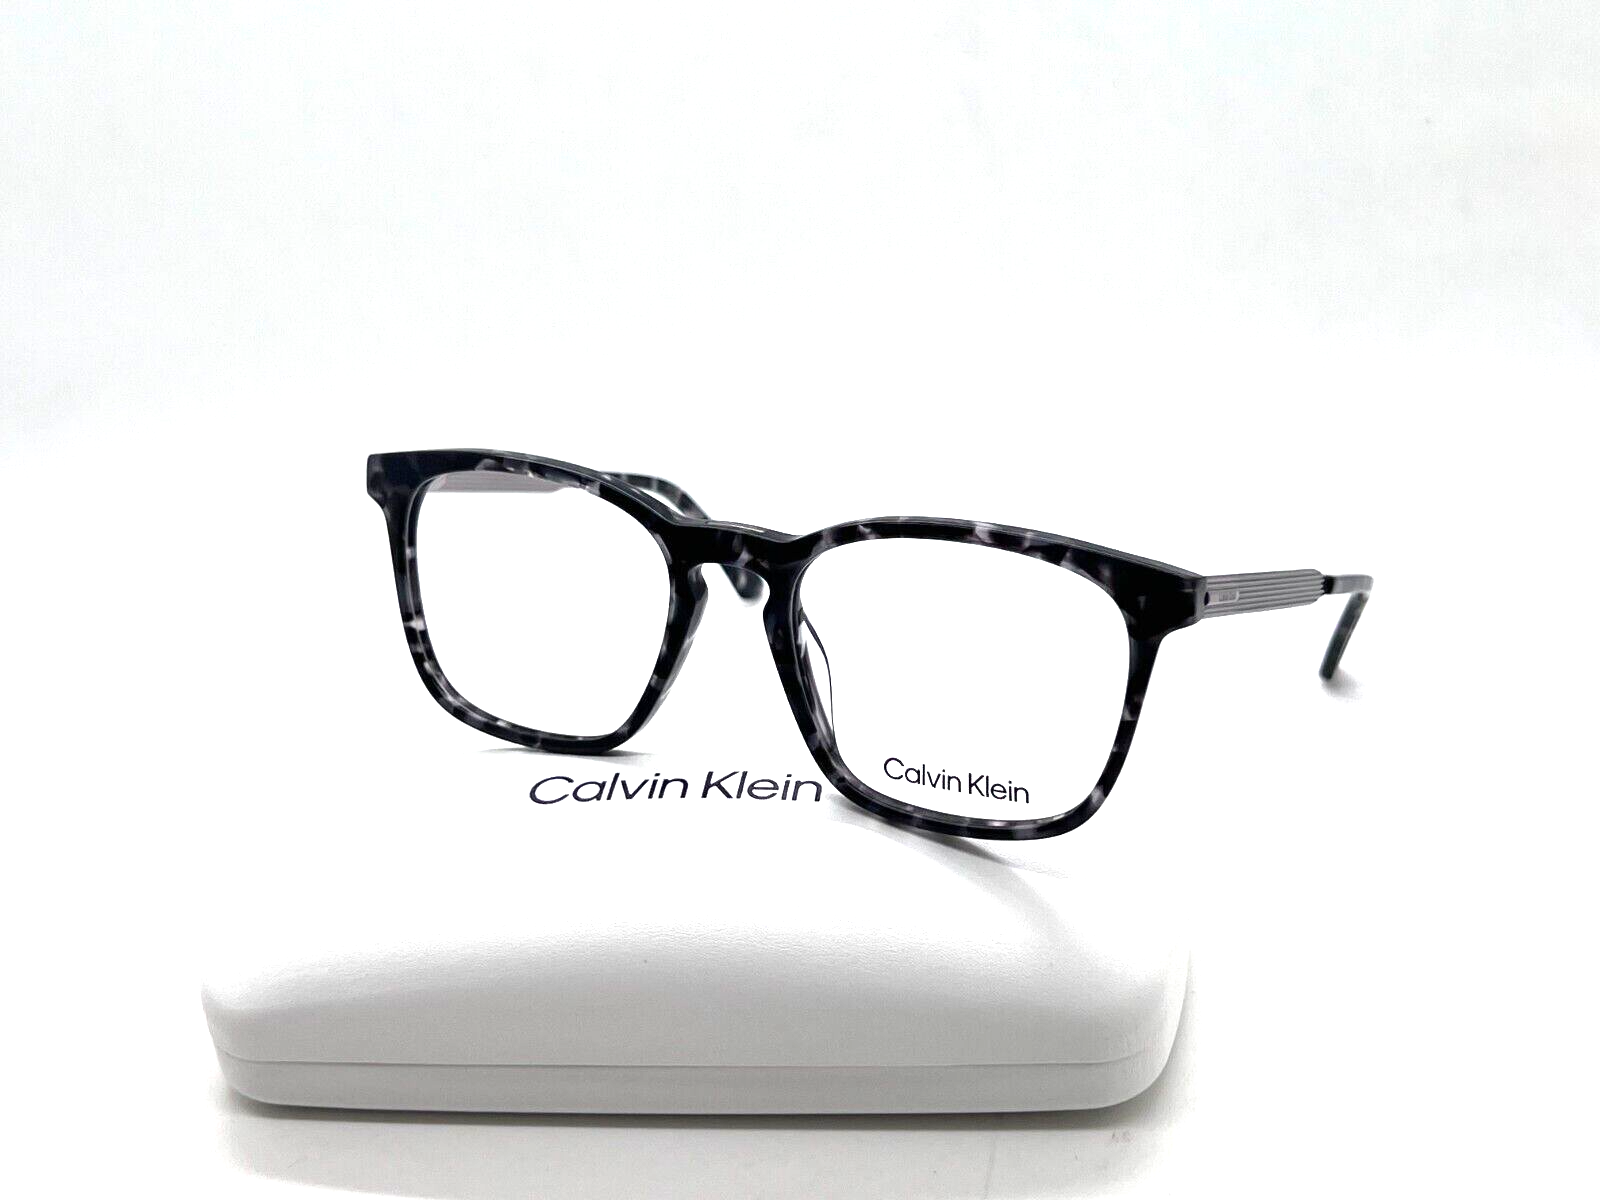 Calvin Klein CK 22503 025 GREY HAVANA  OPTICAL Eyeglasses Frame 53-19-145MM - $53.32